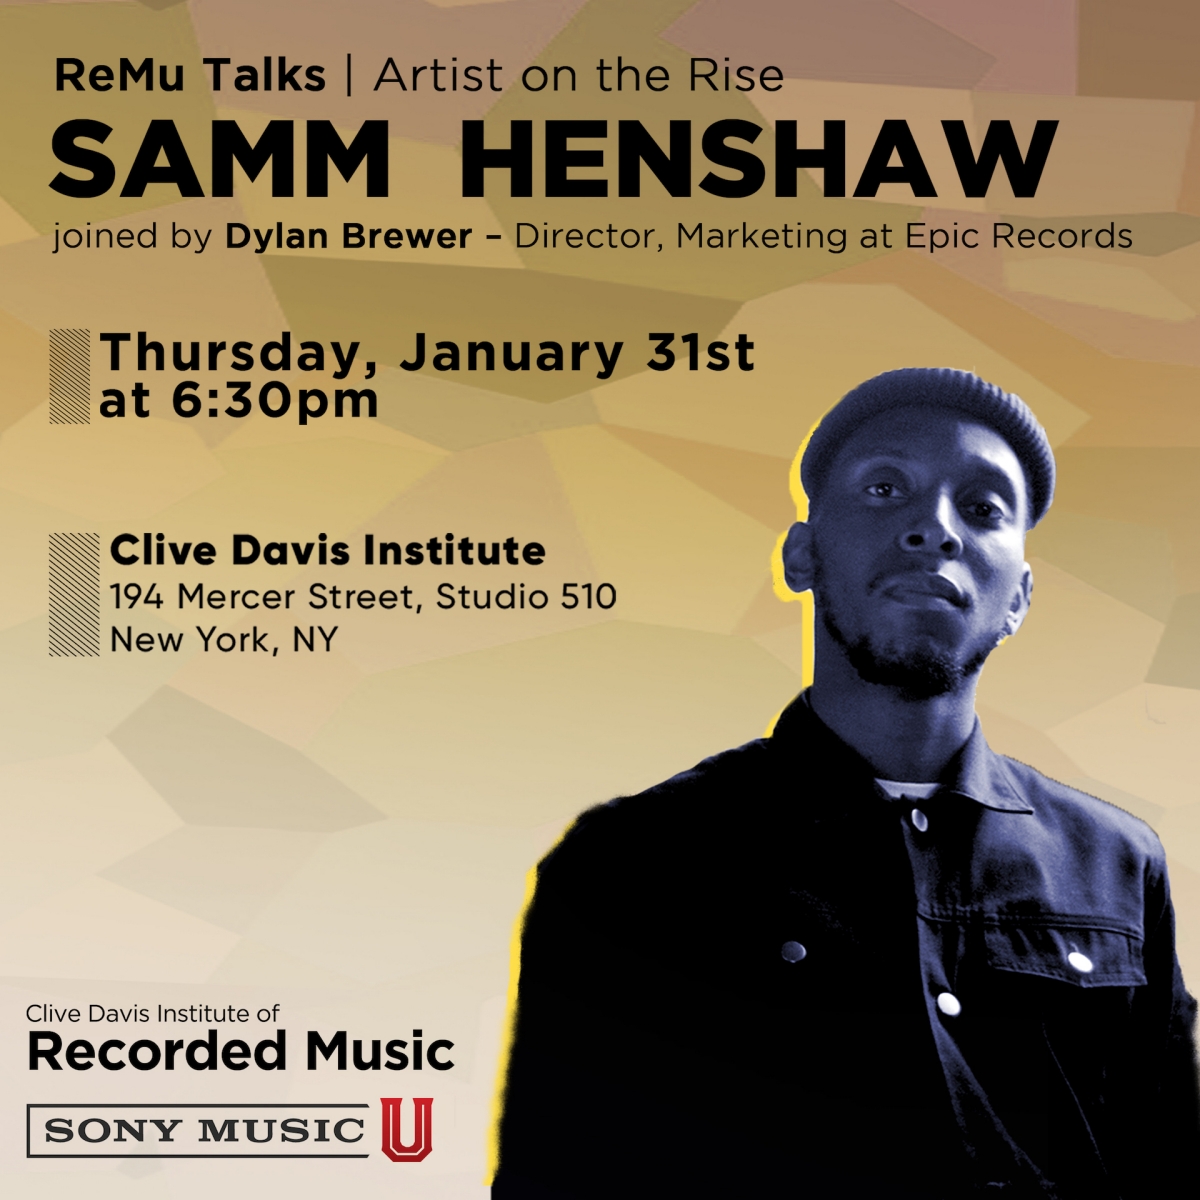 flyer to promote Samm Henshaw event at NYU